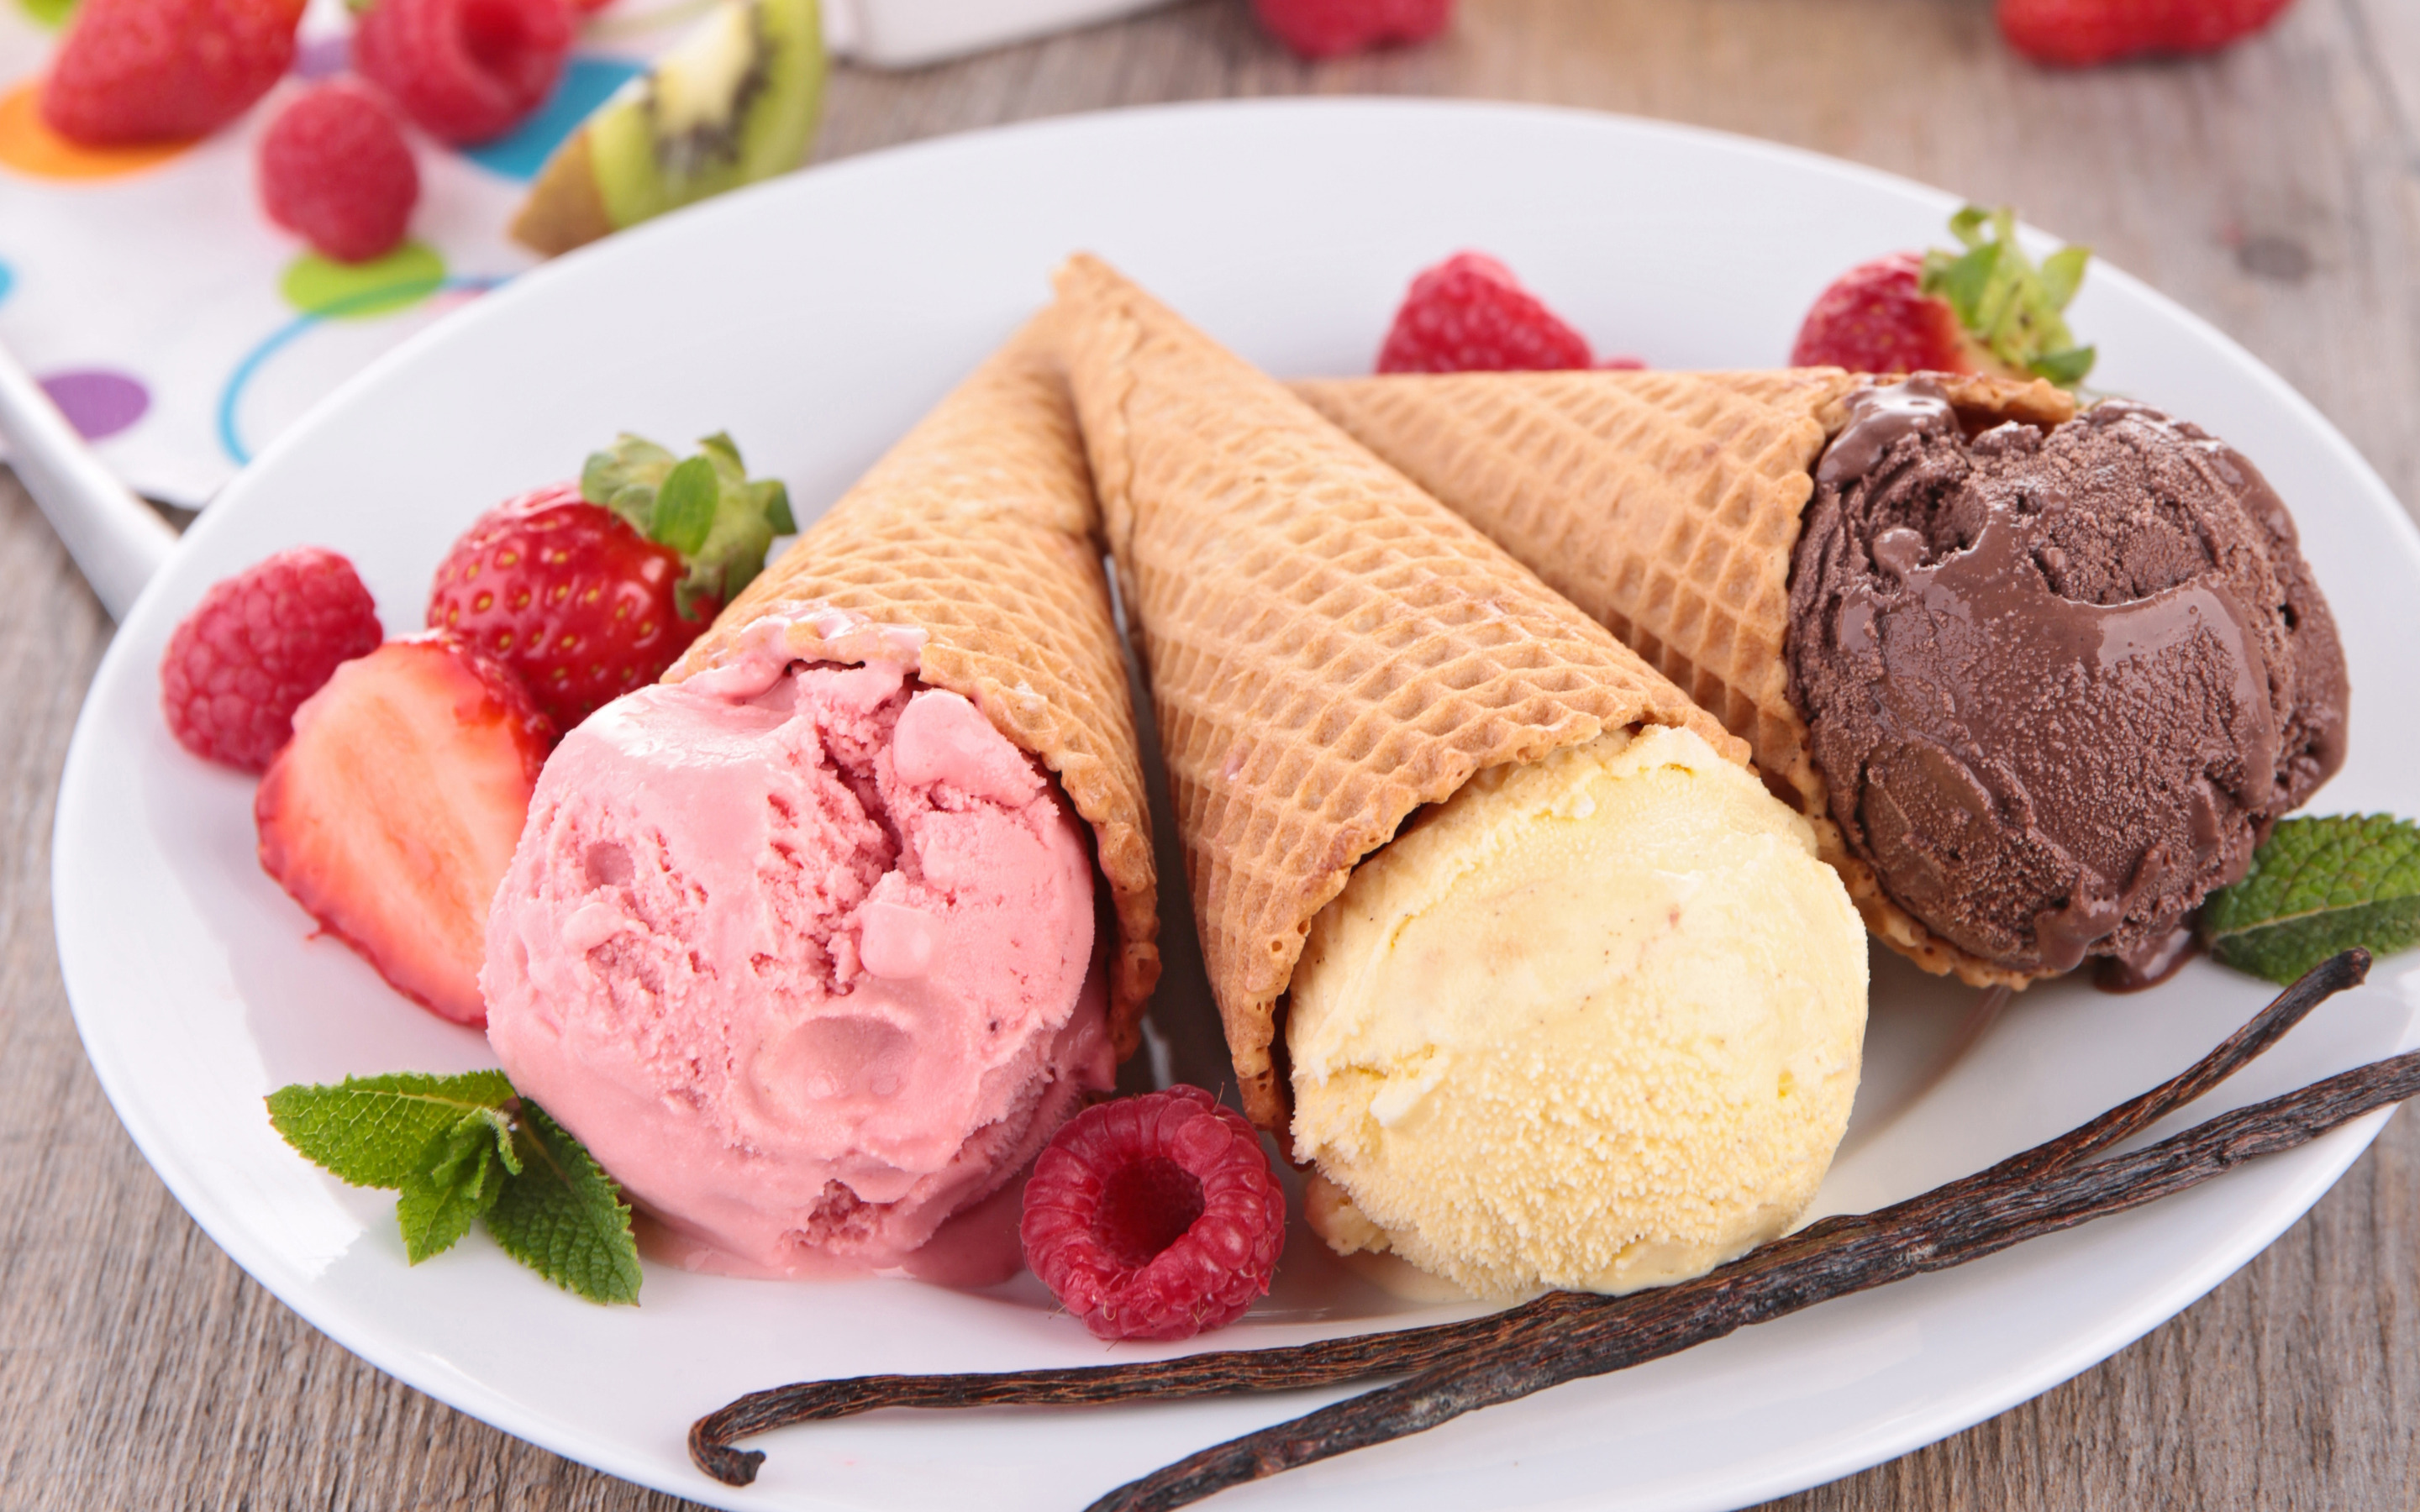 Айс день. Мороженое. Красивое мороженое. Мороженое в рожках. Мороженое рожок.